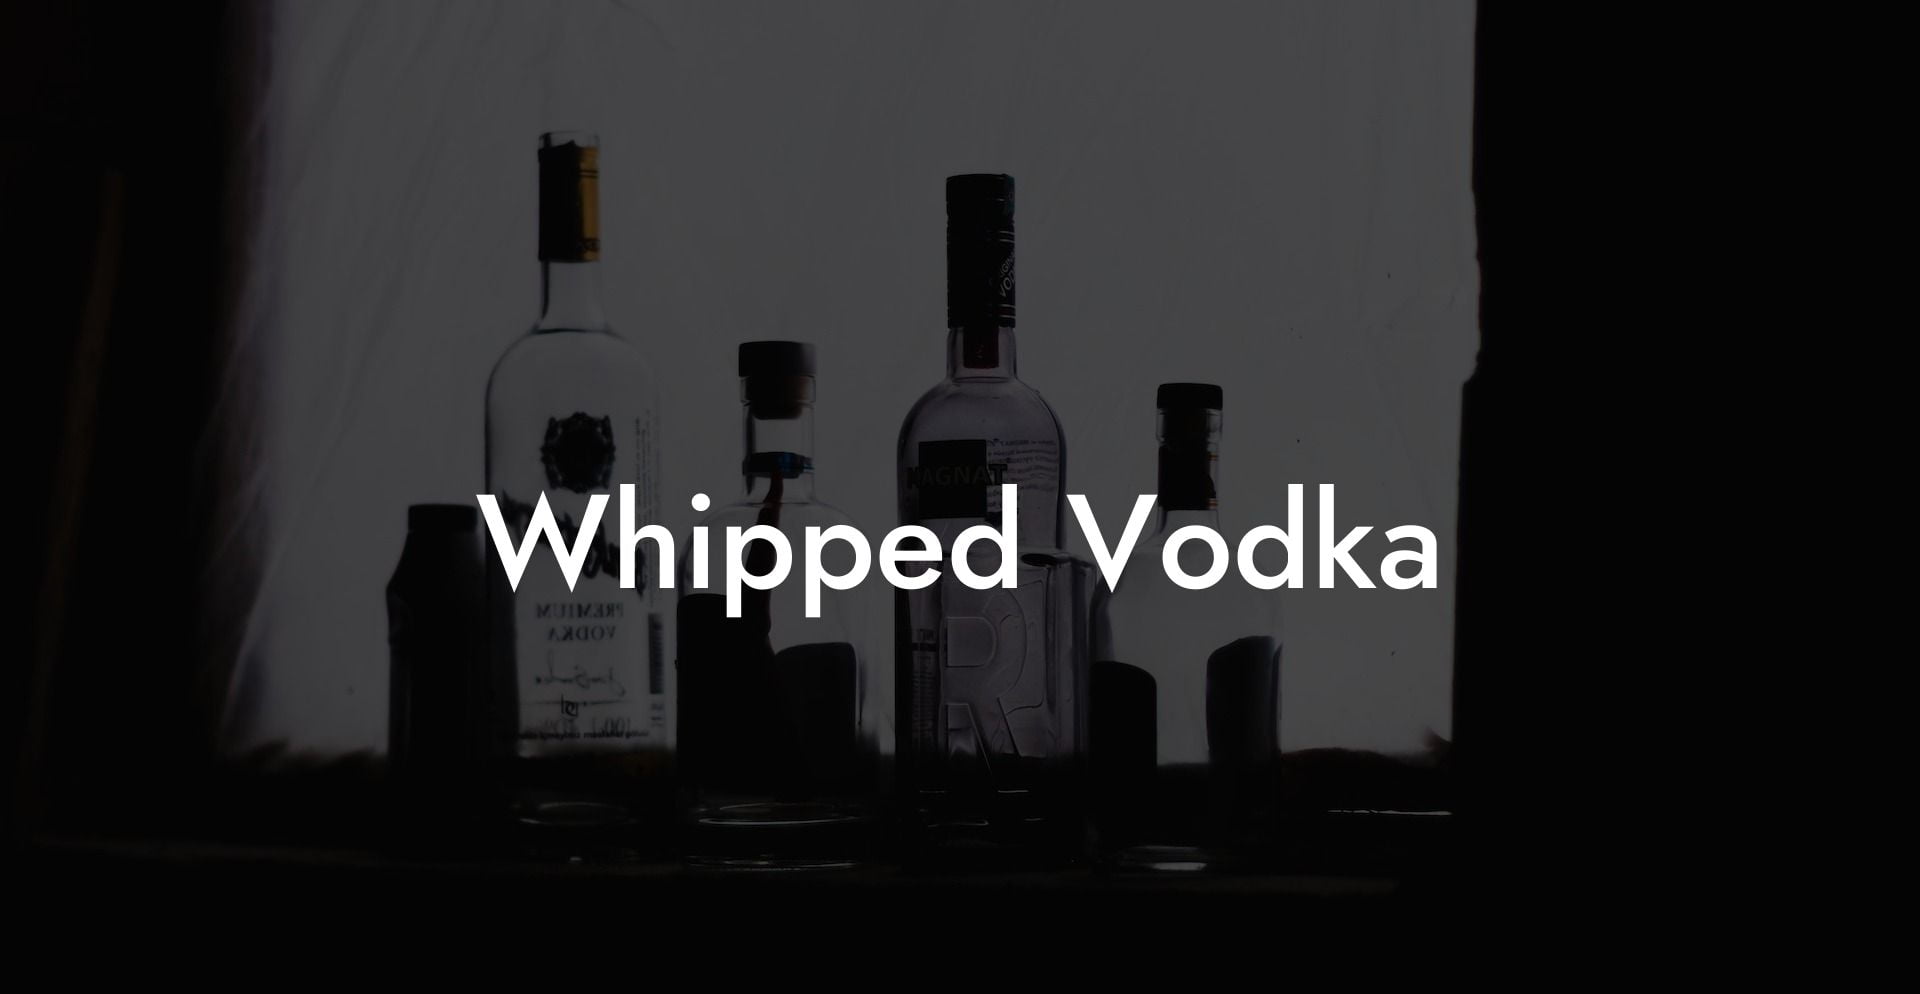 Whipped Vodka